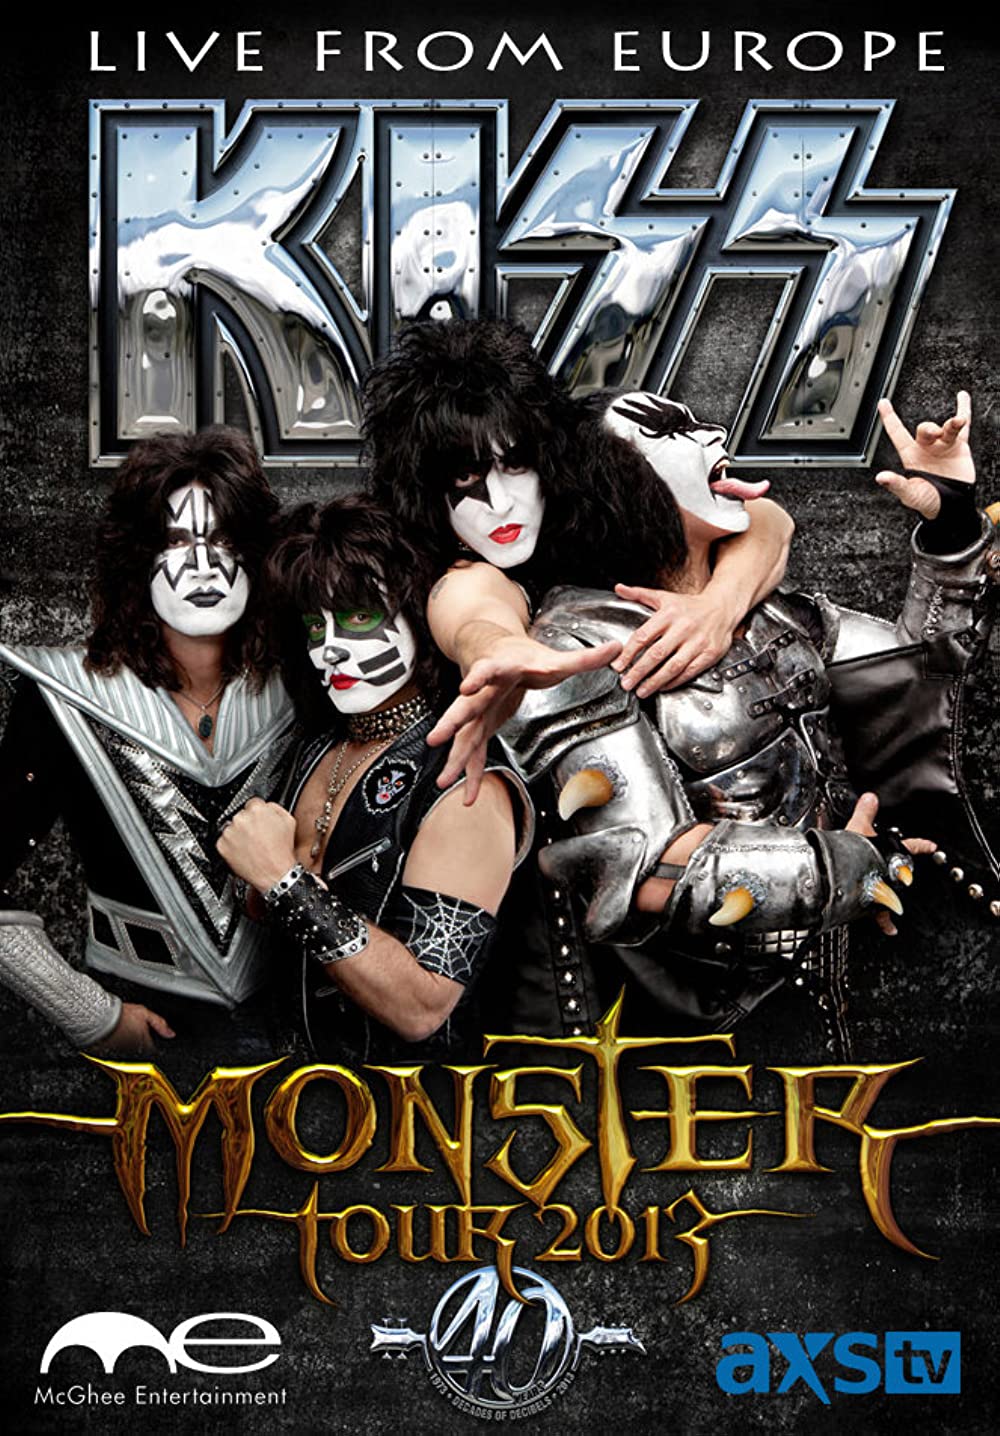 KISS 2012-2013 Monster World Tour GERMANY Commemorative City Guitar Picks